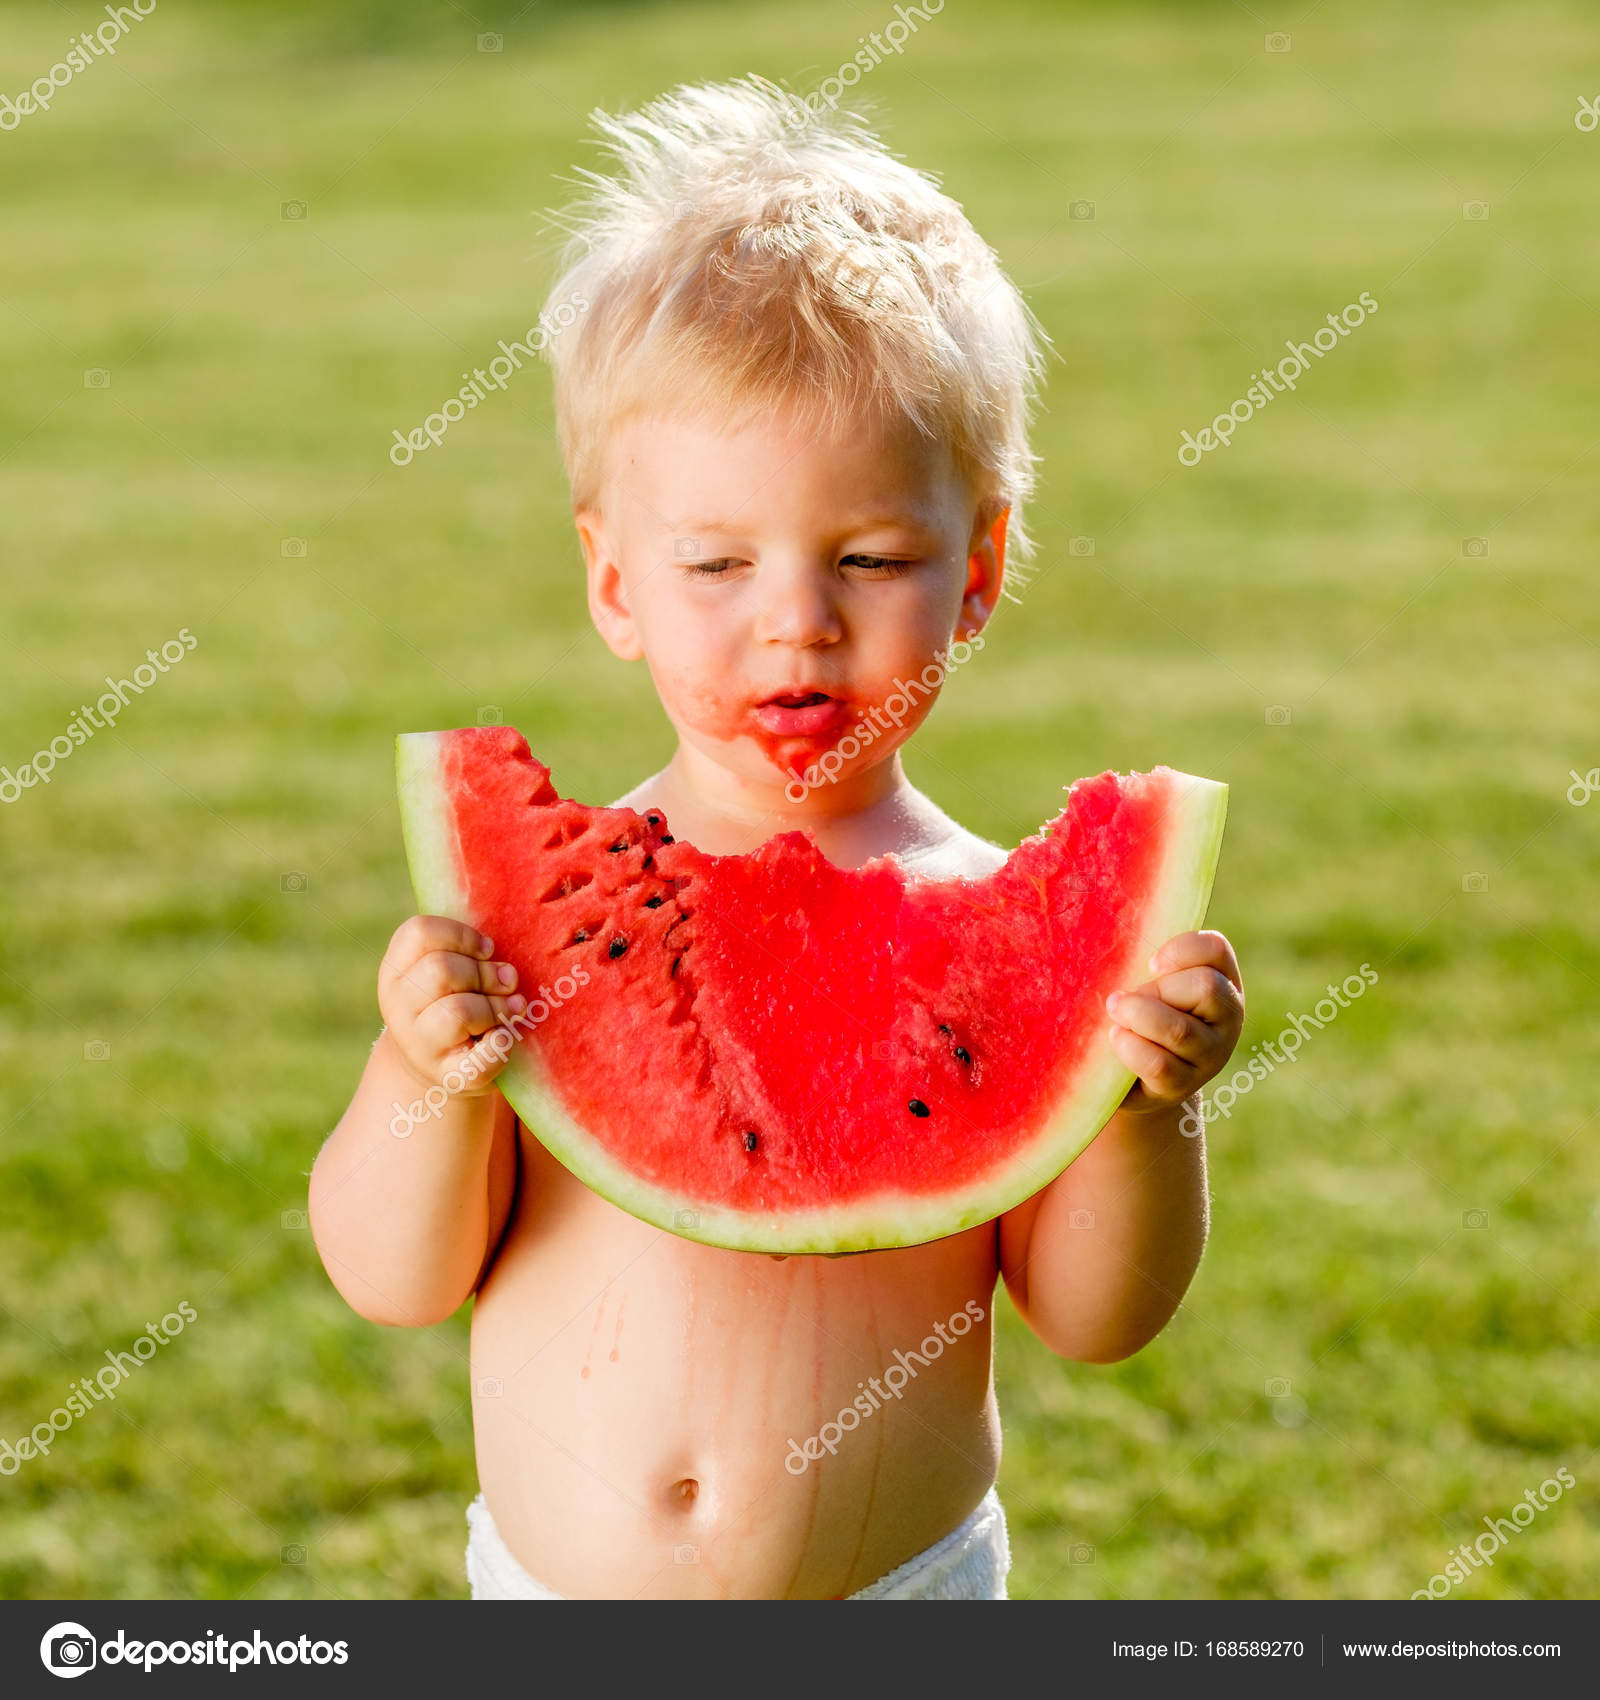 Baby boy eating watermelon — Stock Photo © haveseen #168589270